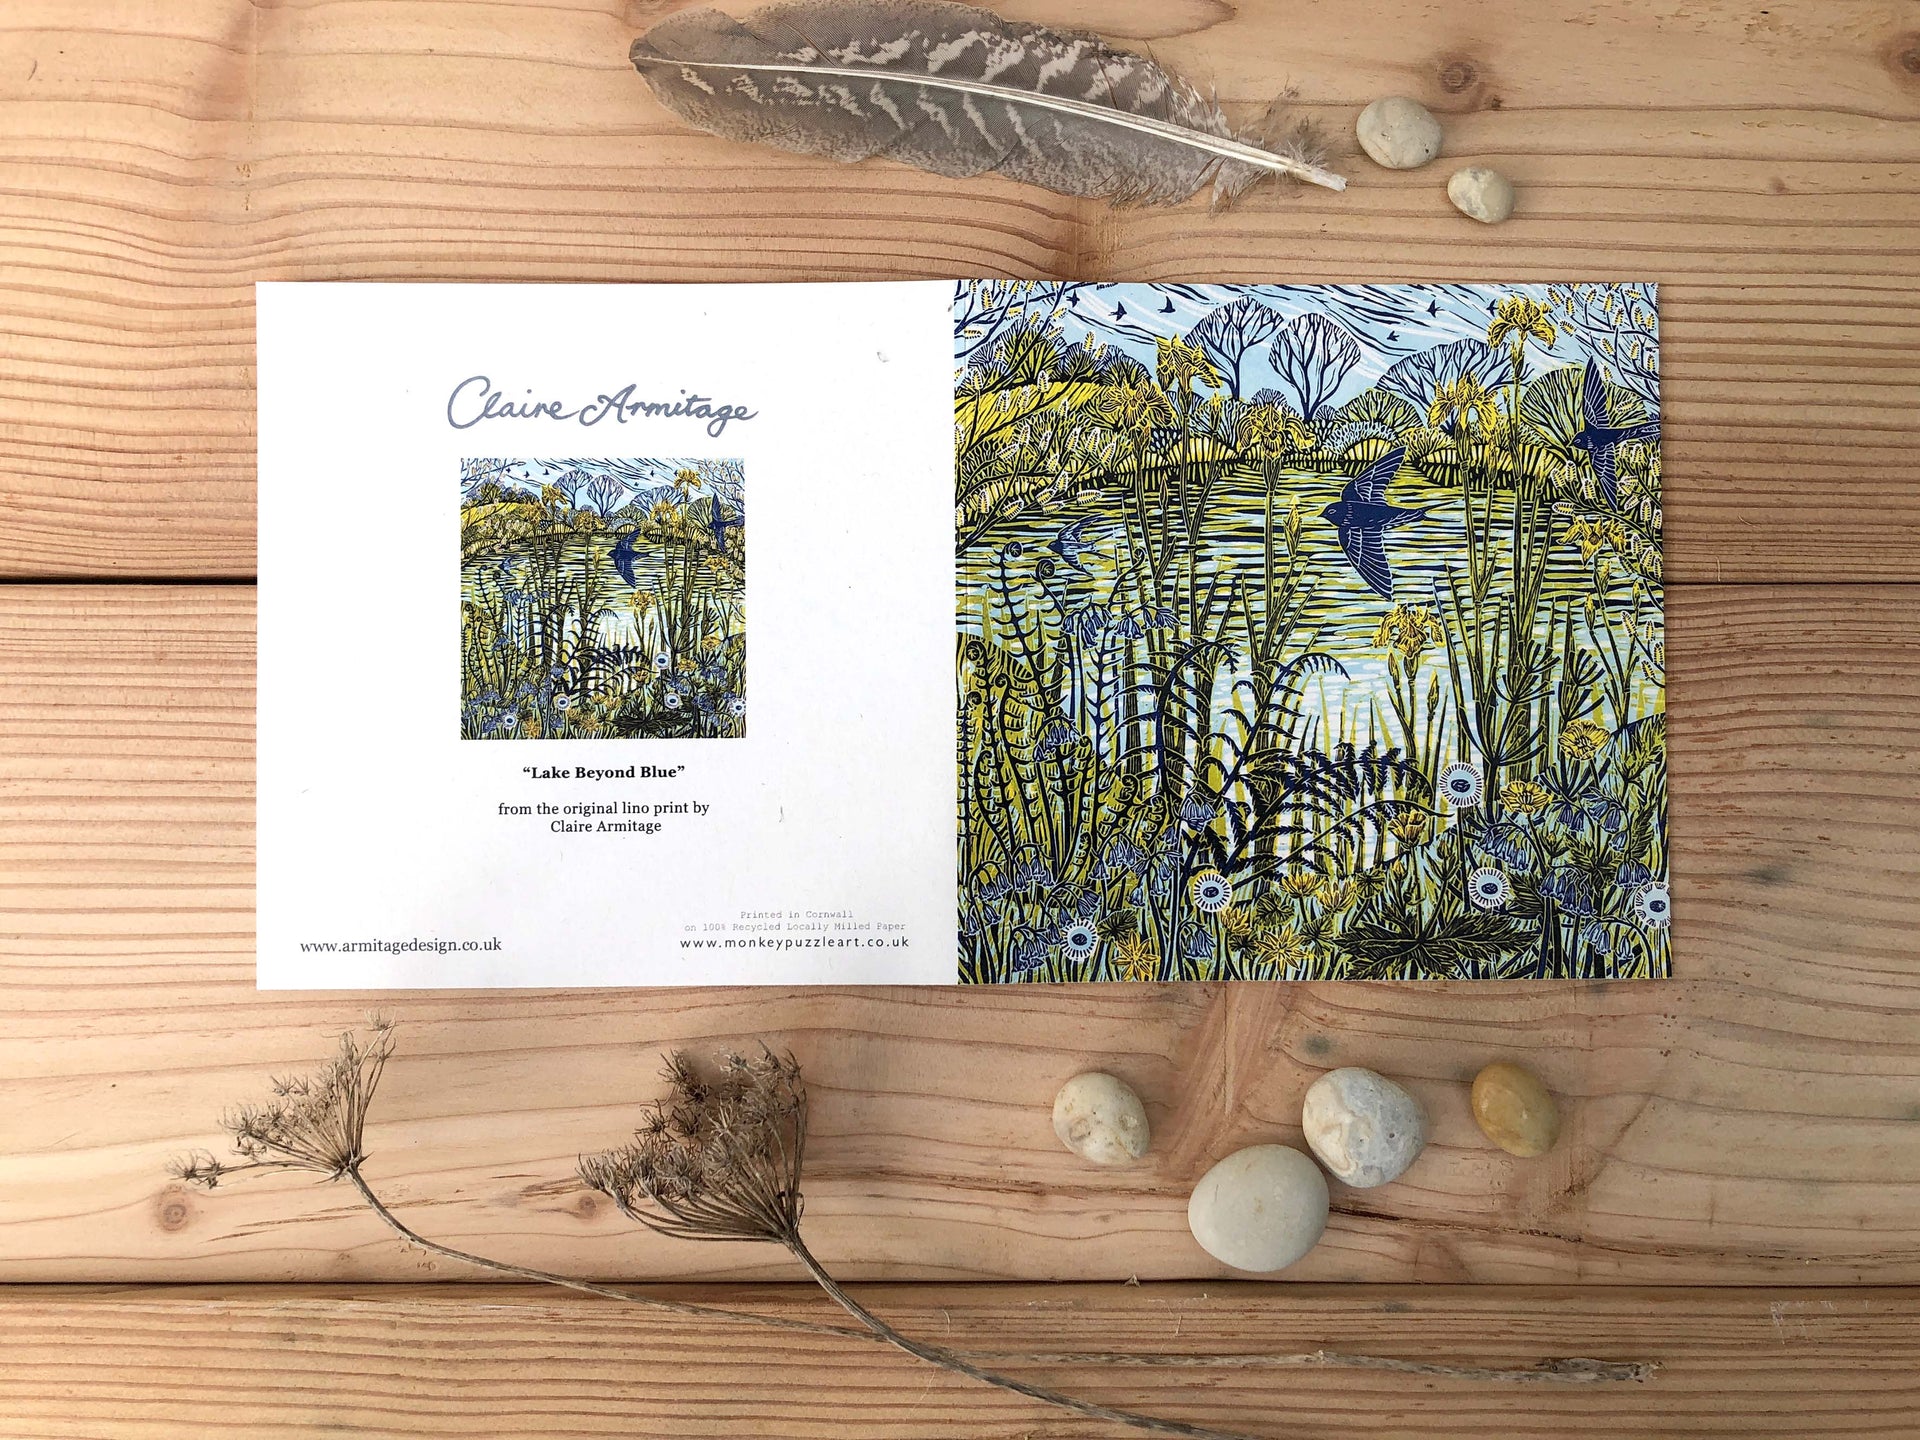 Claire Armitage, artist, lino print, greeting card